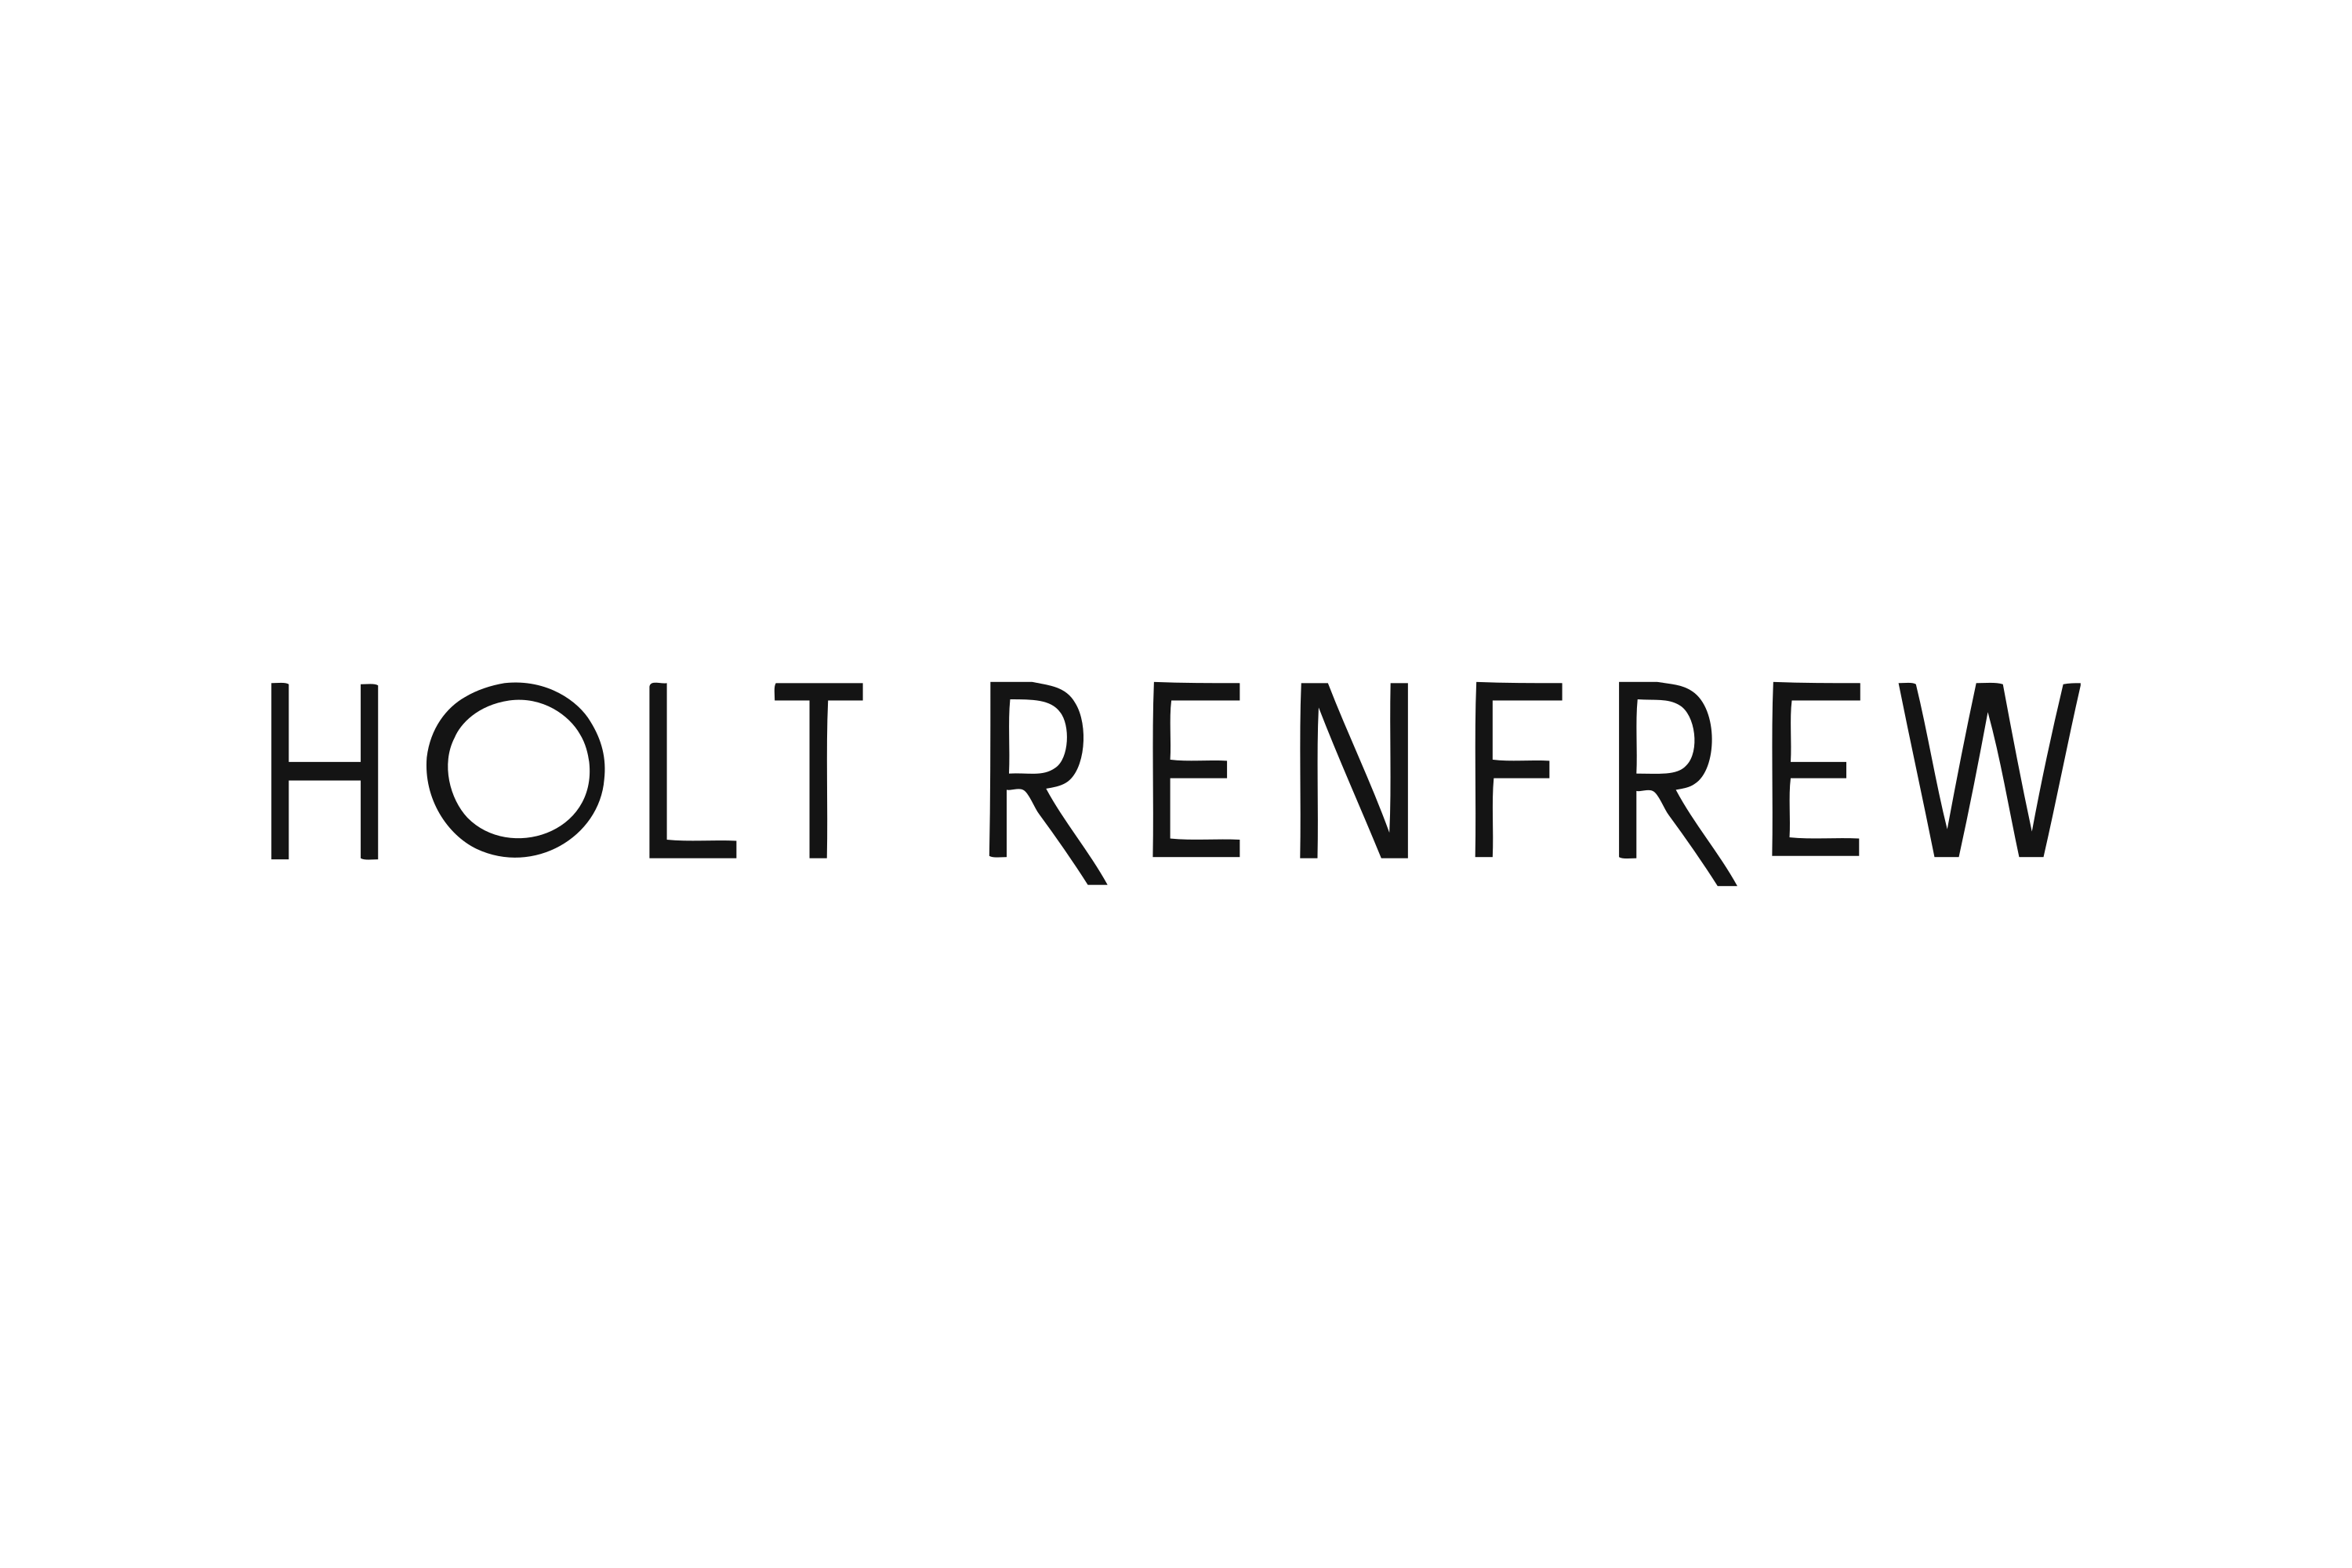 Holt Renfrew Logo